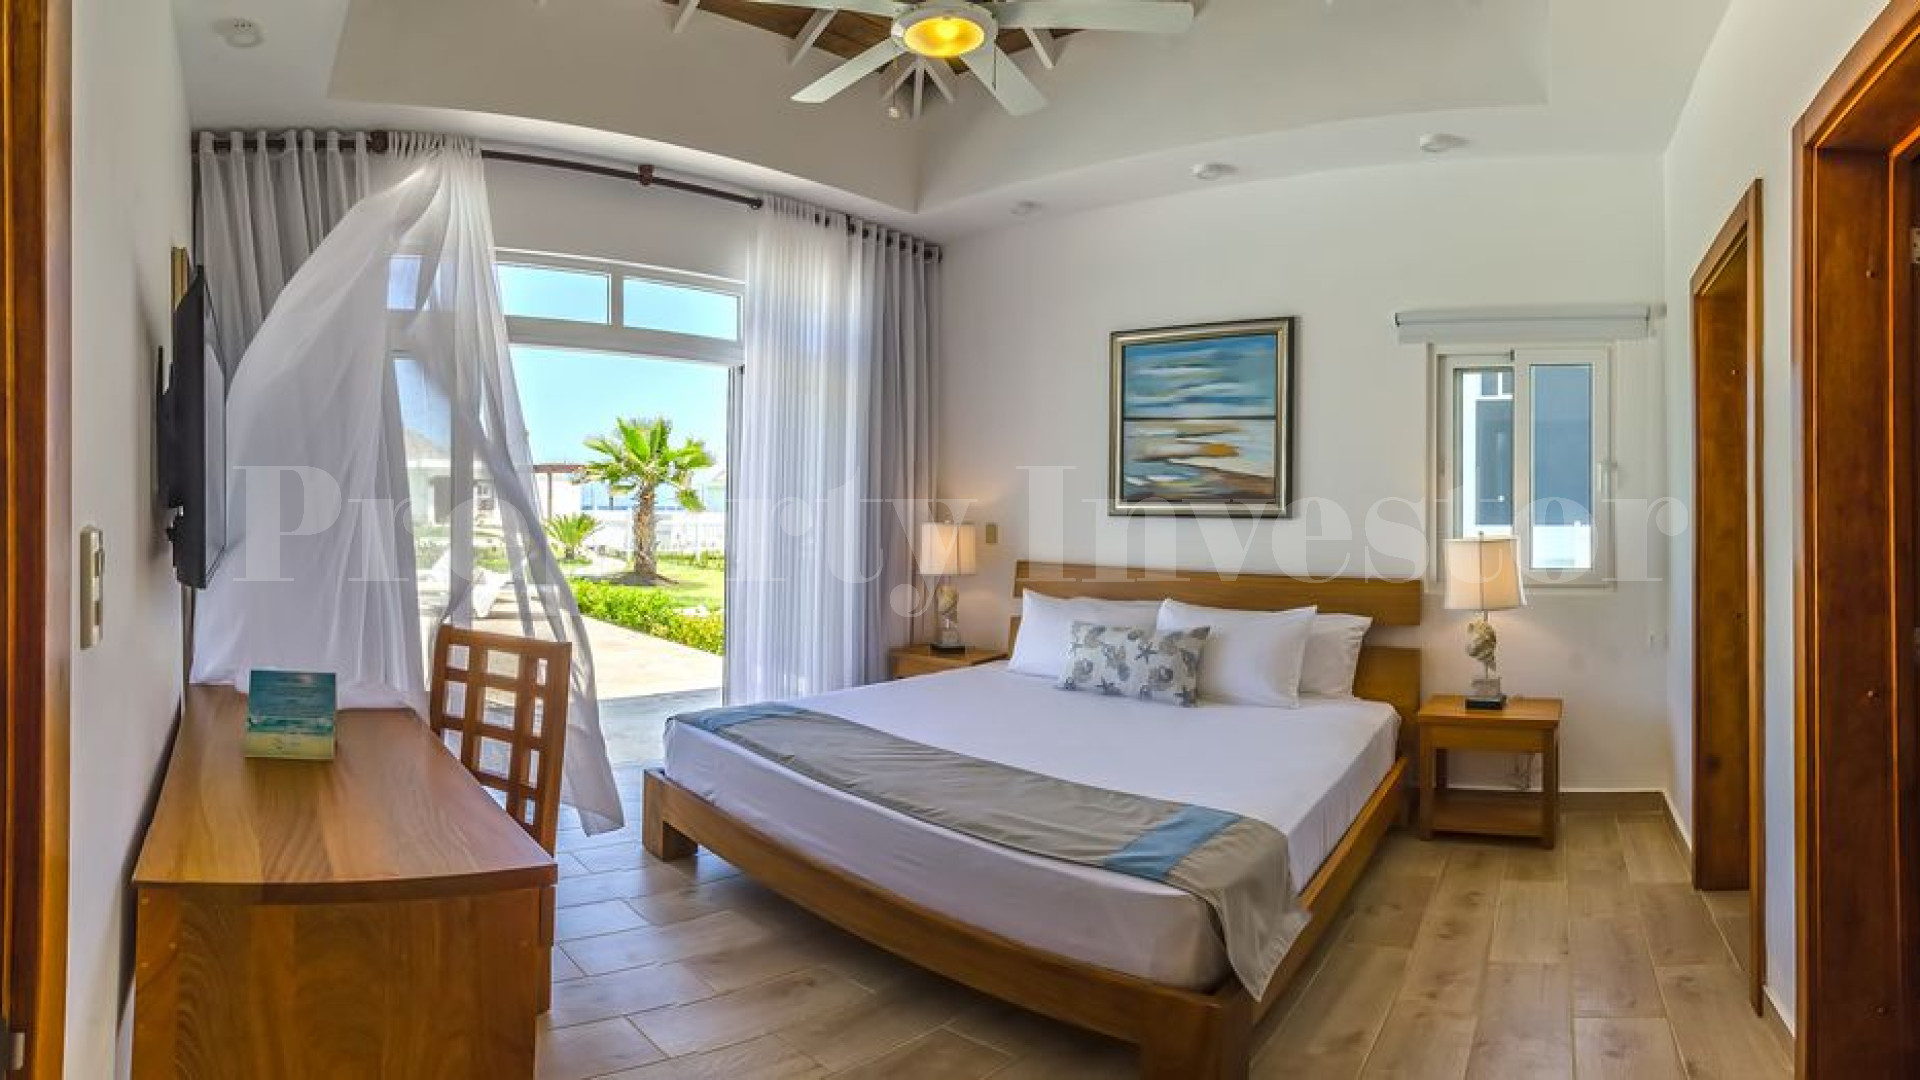 3 Bedroom Oceanview Villa in the Dominican Republic with 30 Year Financing (Villa 12)